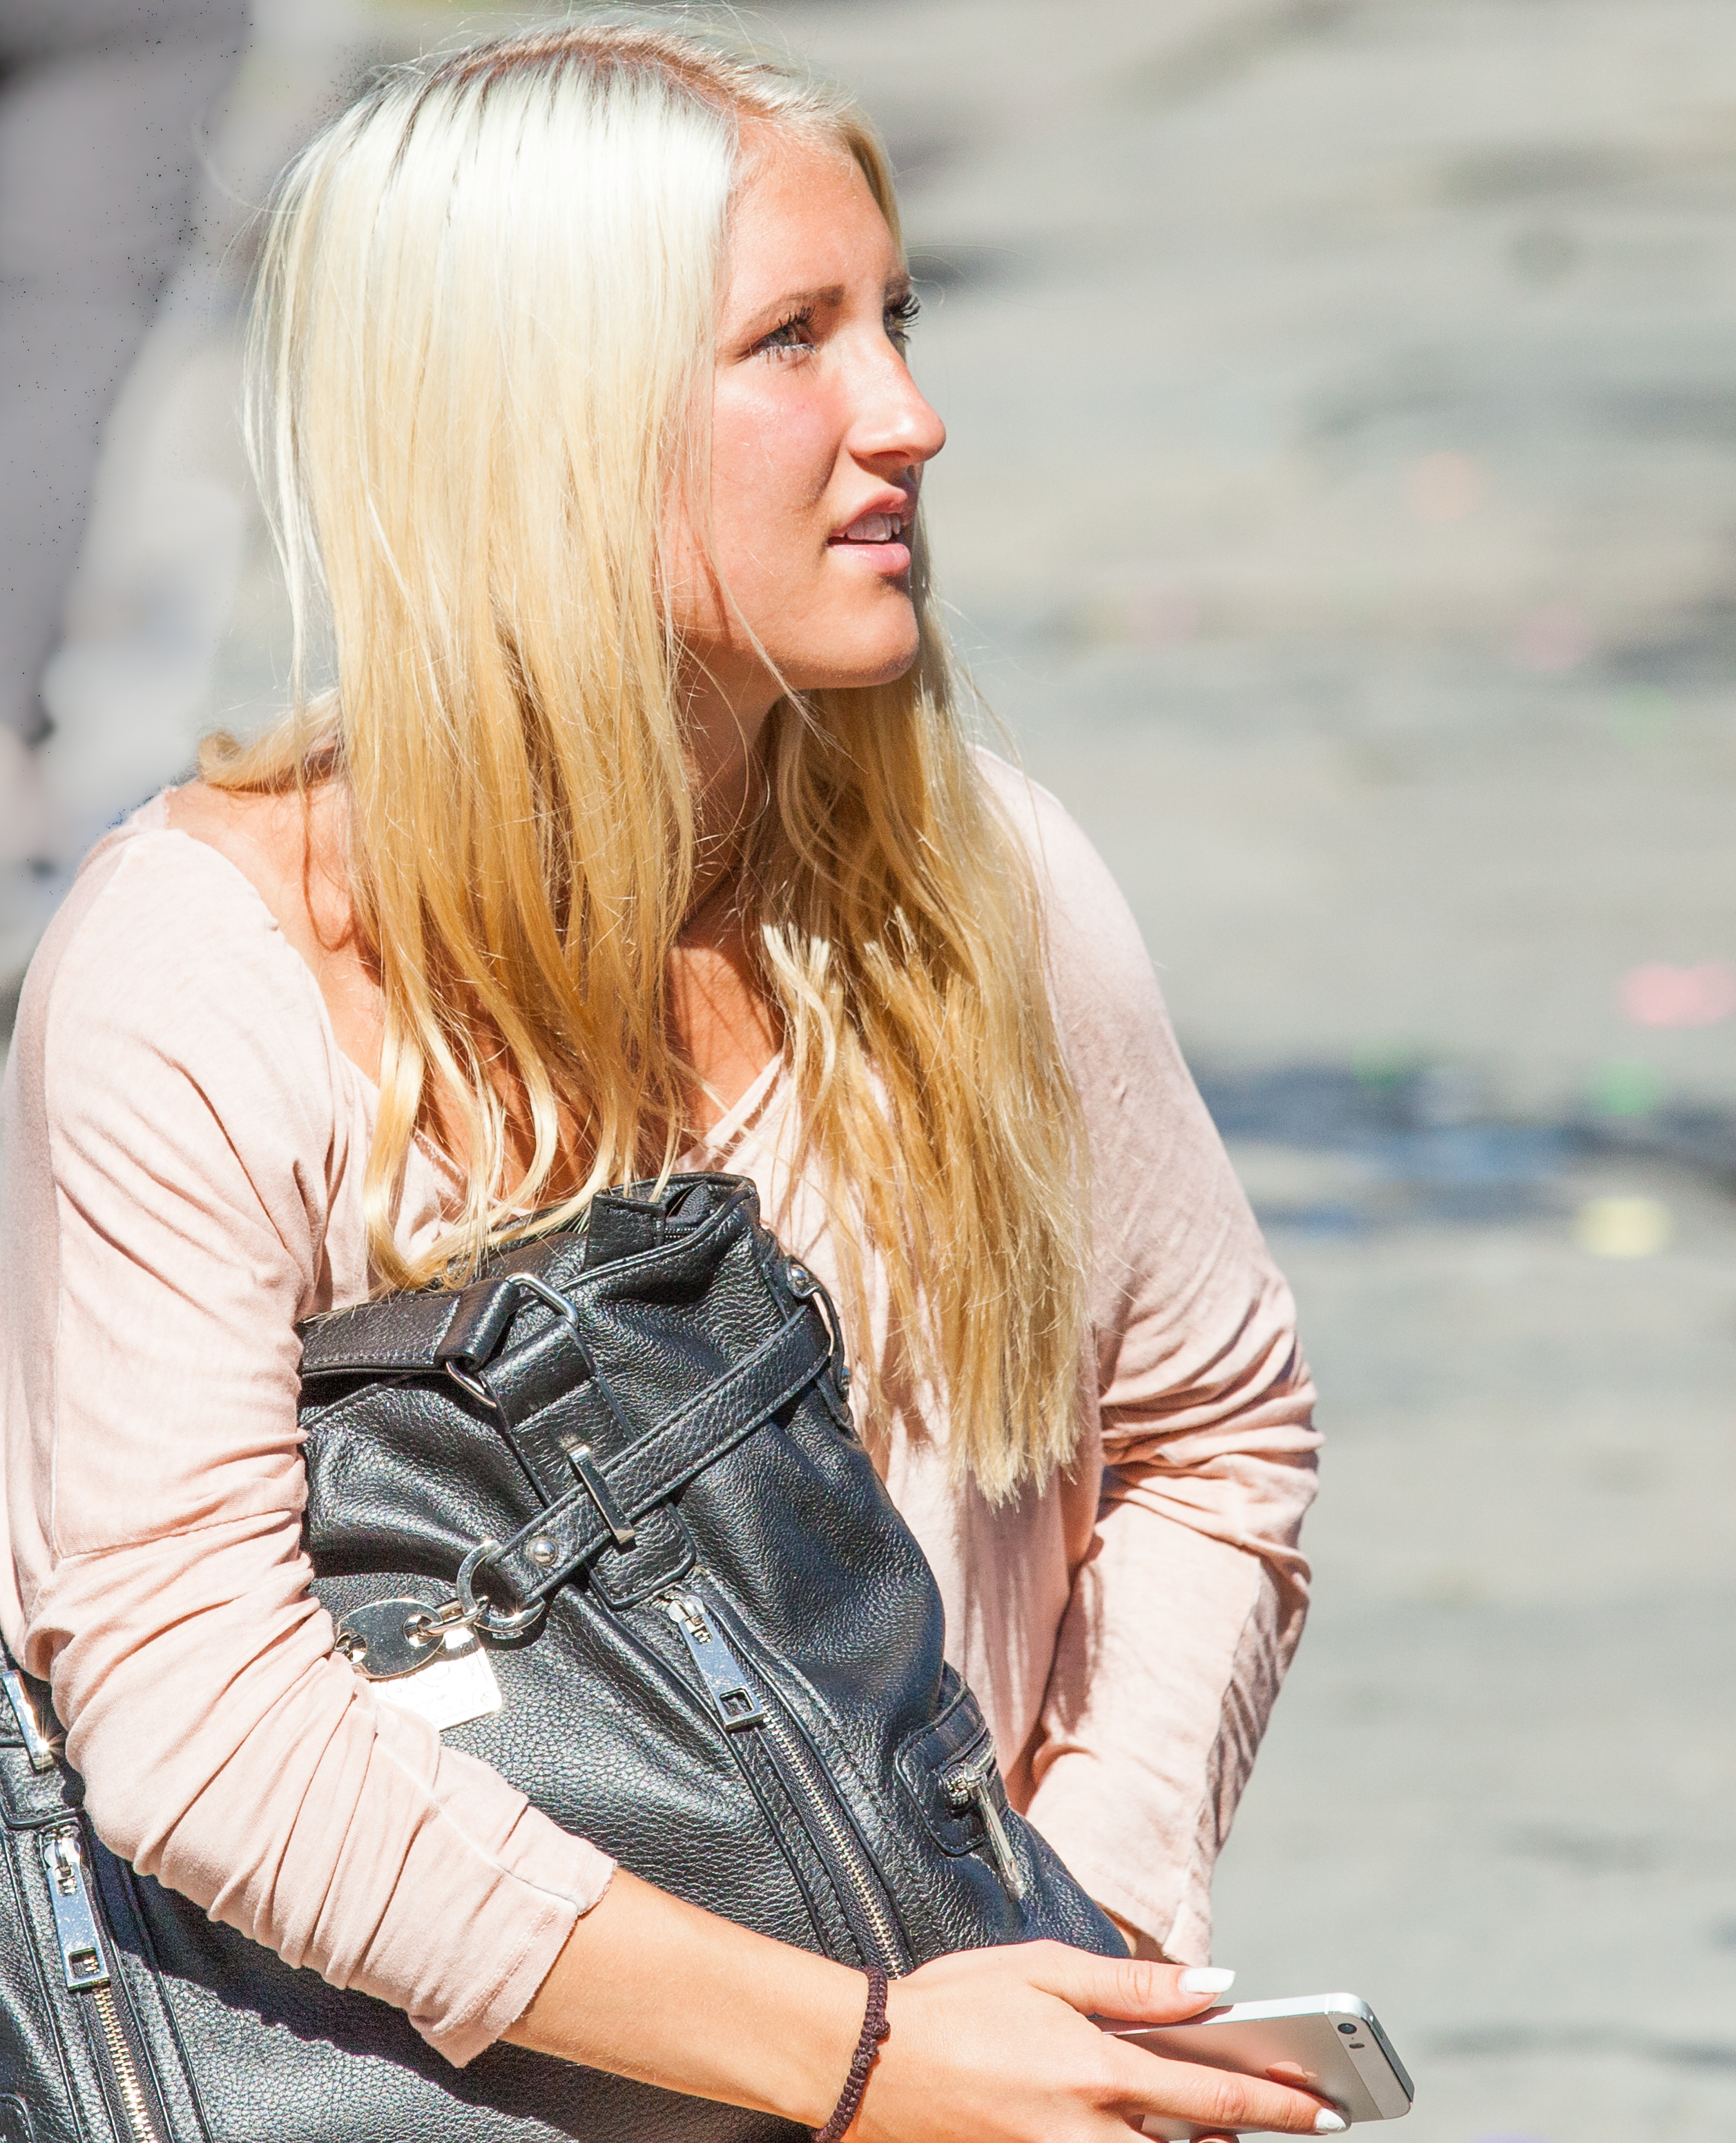 a blond girl in Gothenburg, Sweden in June 2014, picture 4/4